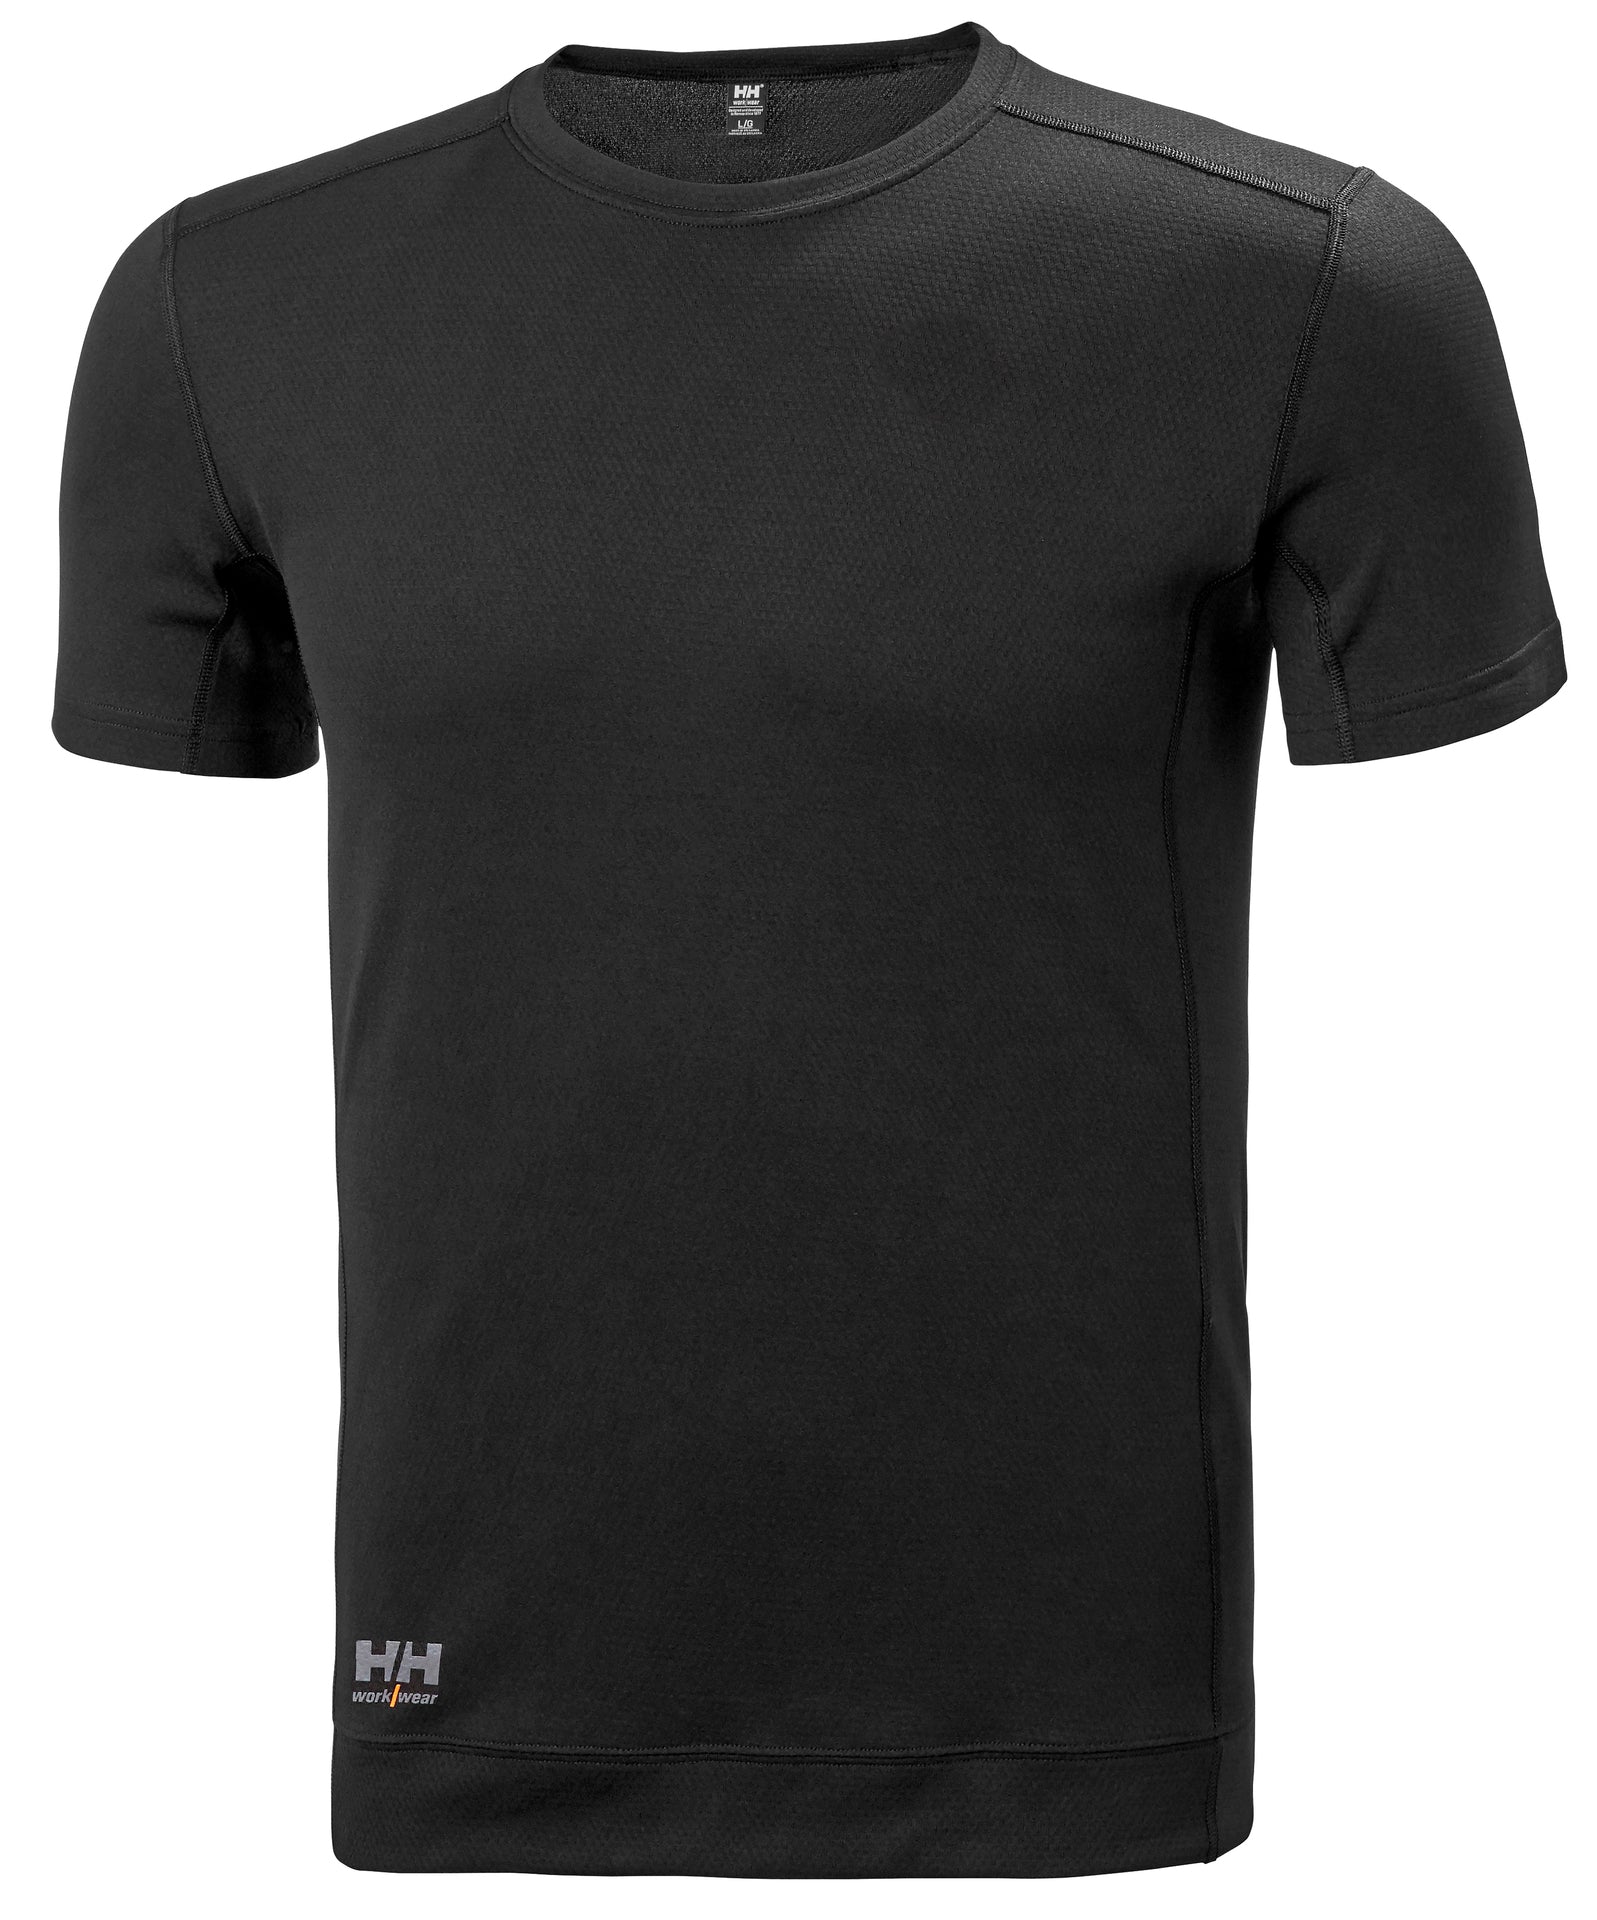 Helly Hansen Hh Lifa Active T-Shirt - Black